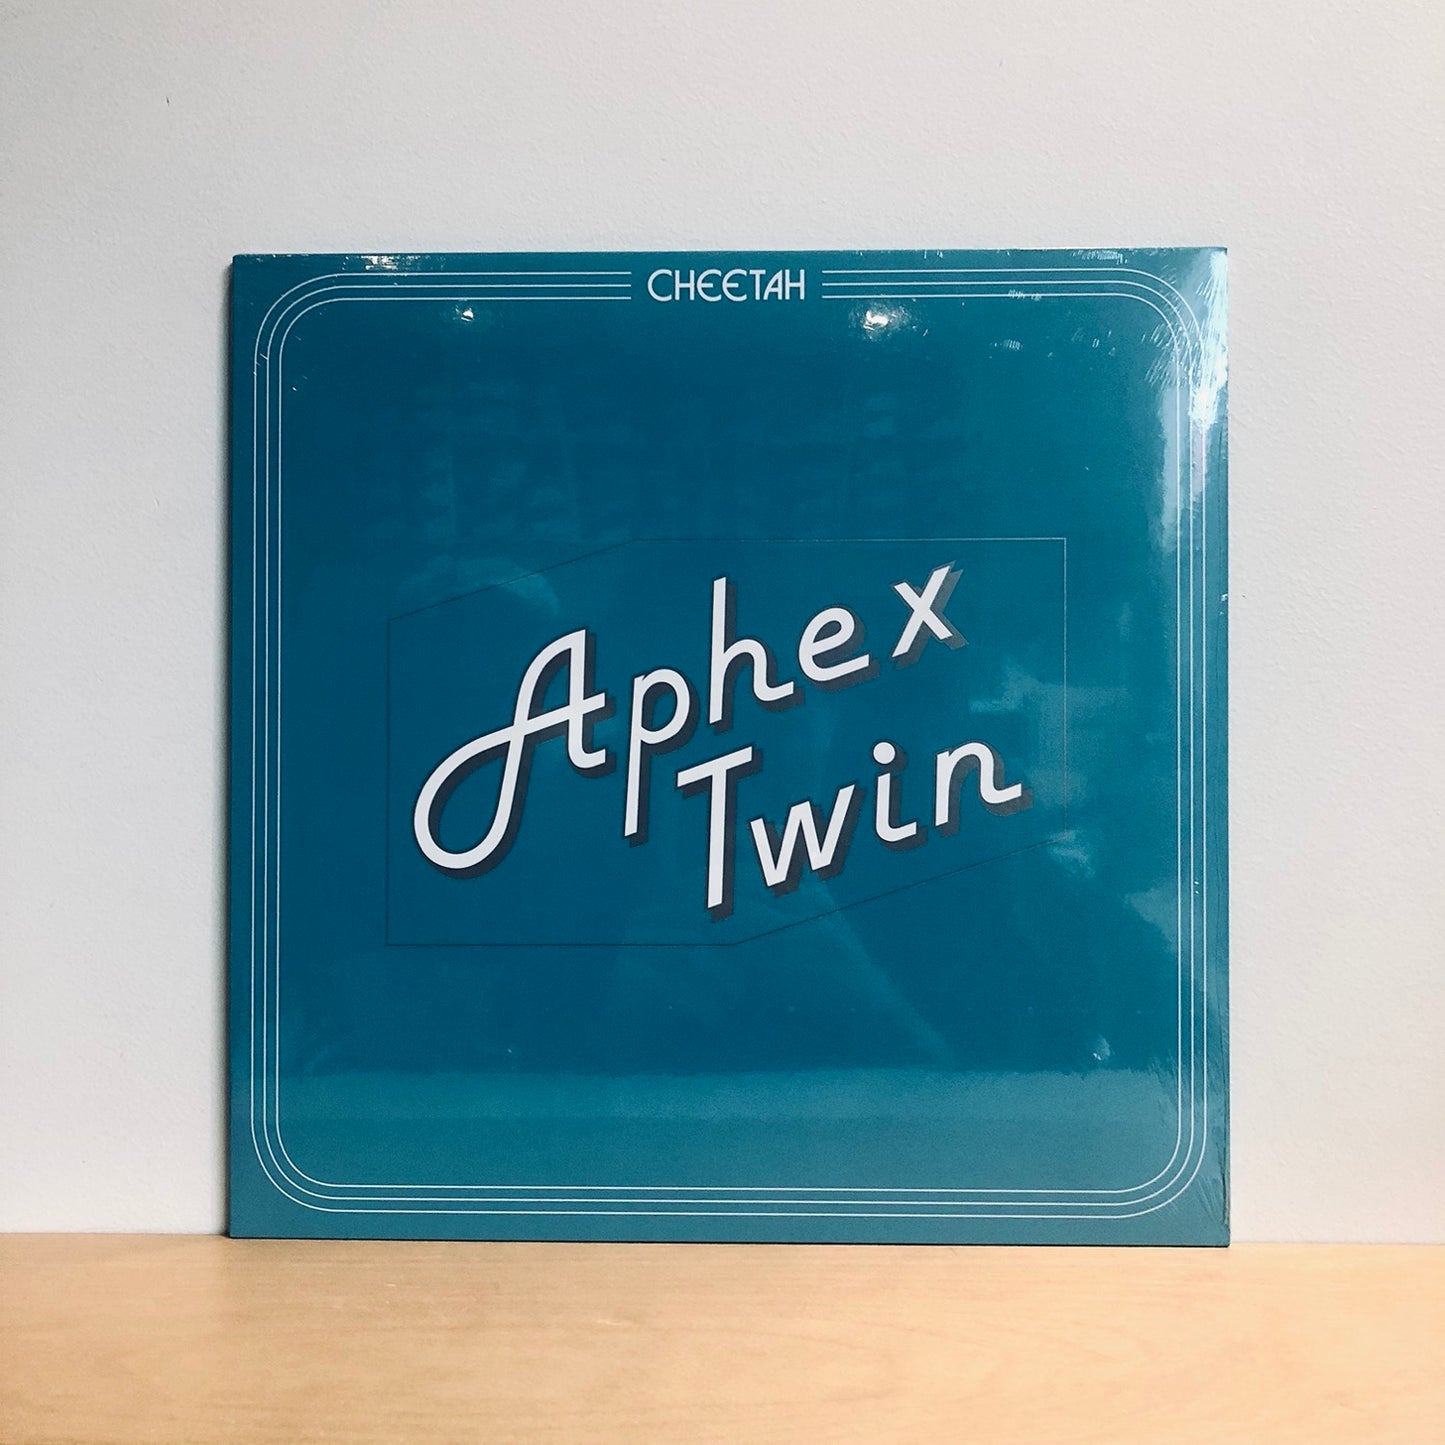 Aphex Twin - Cheetah EP. LP